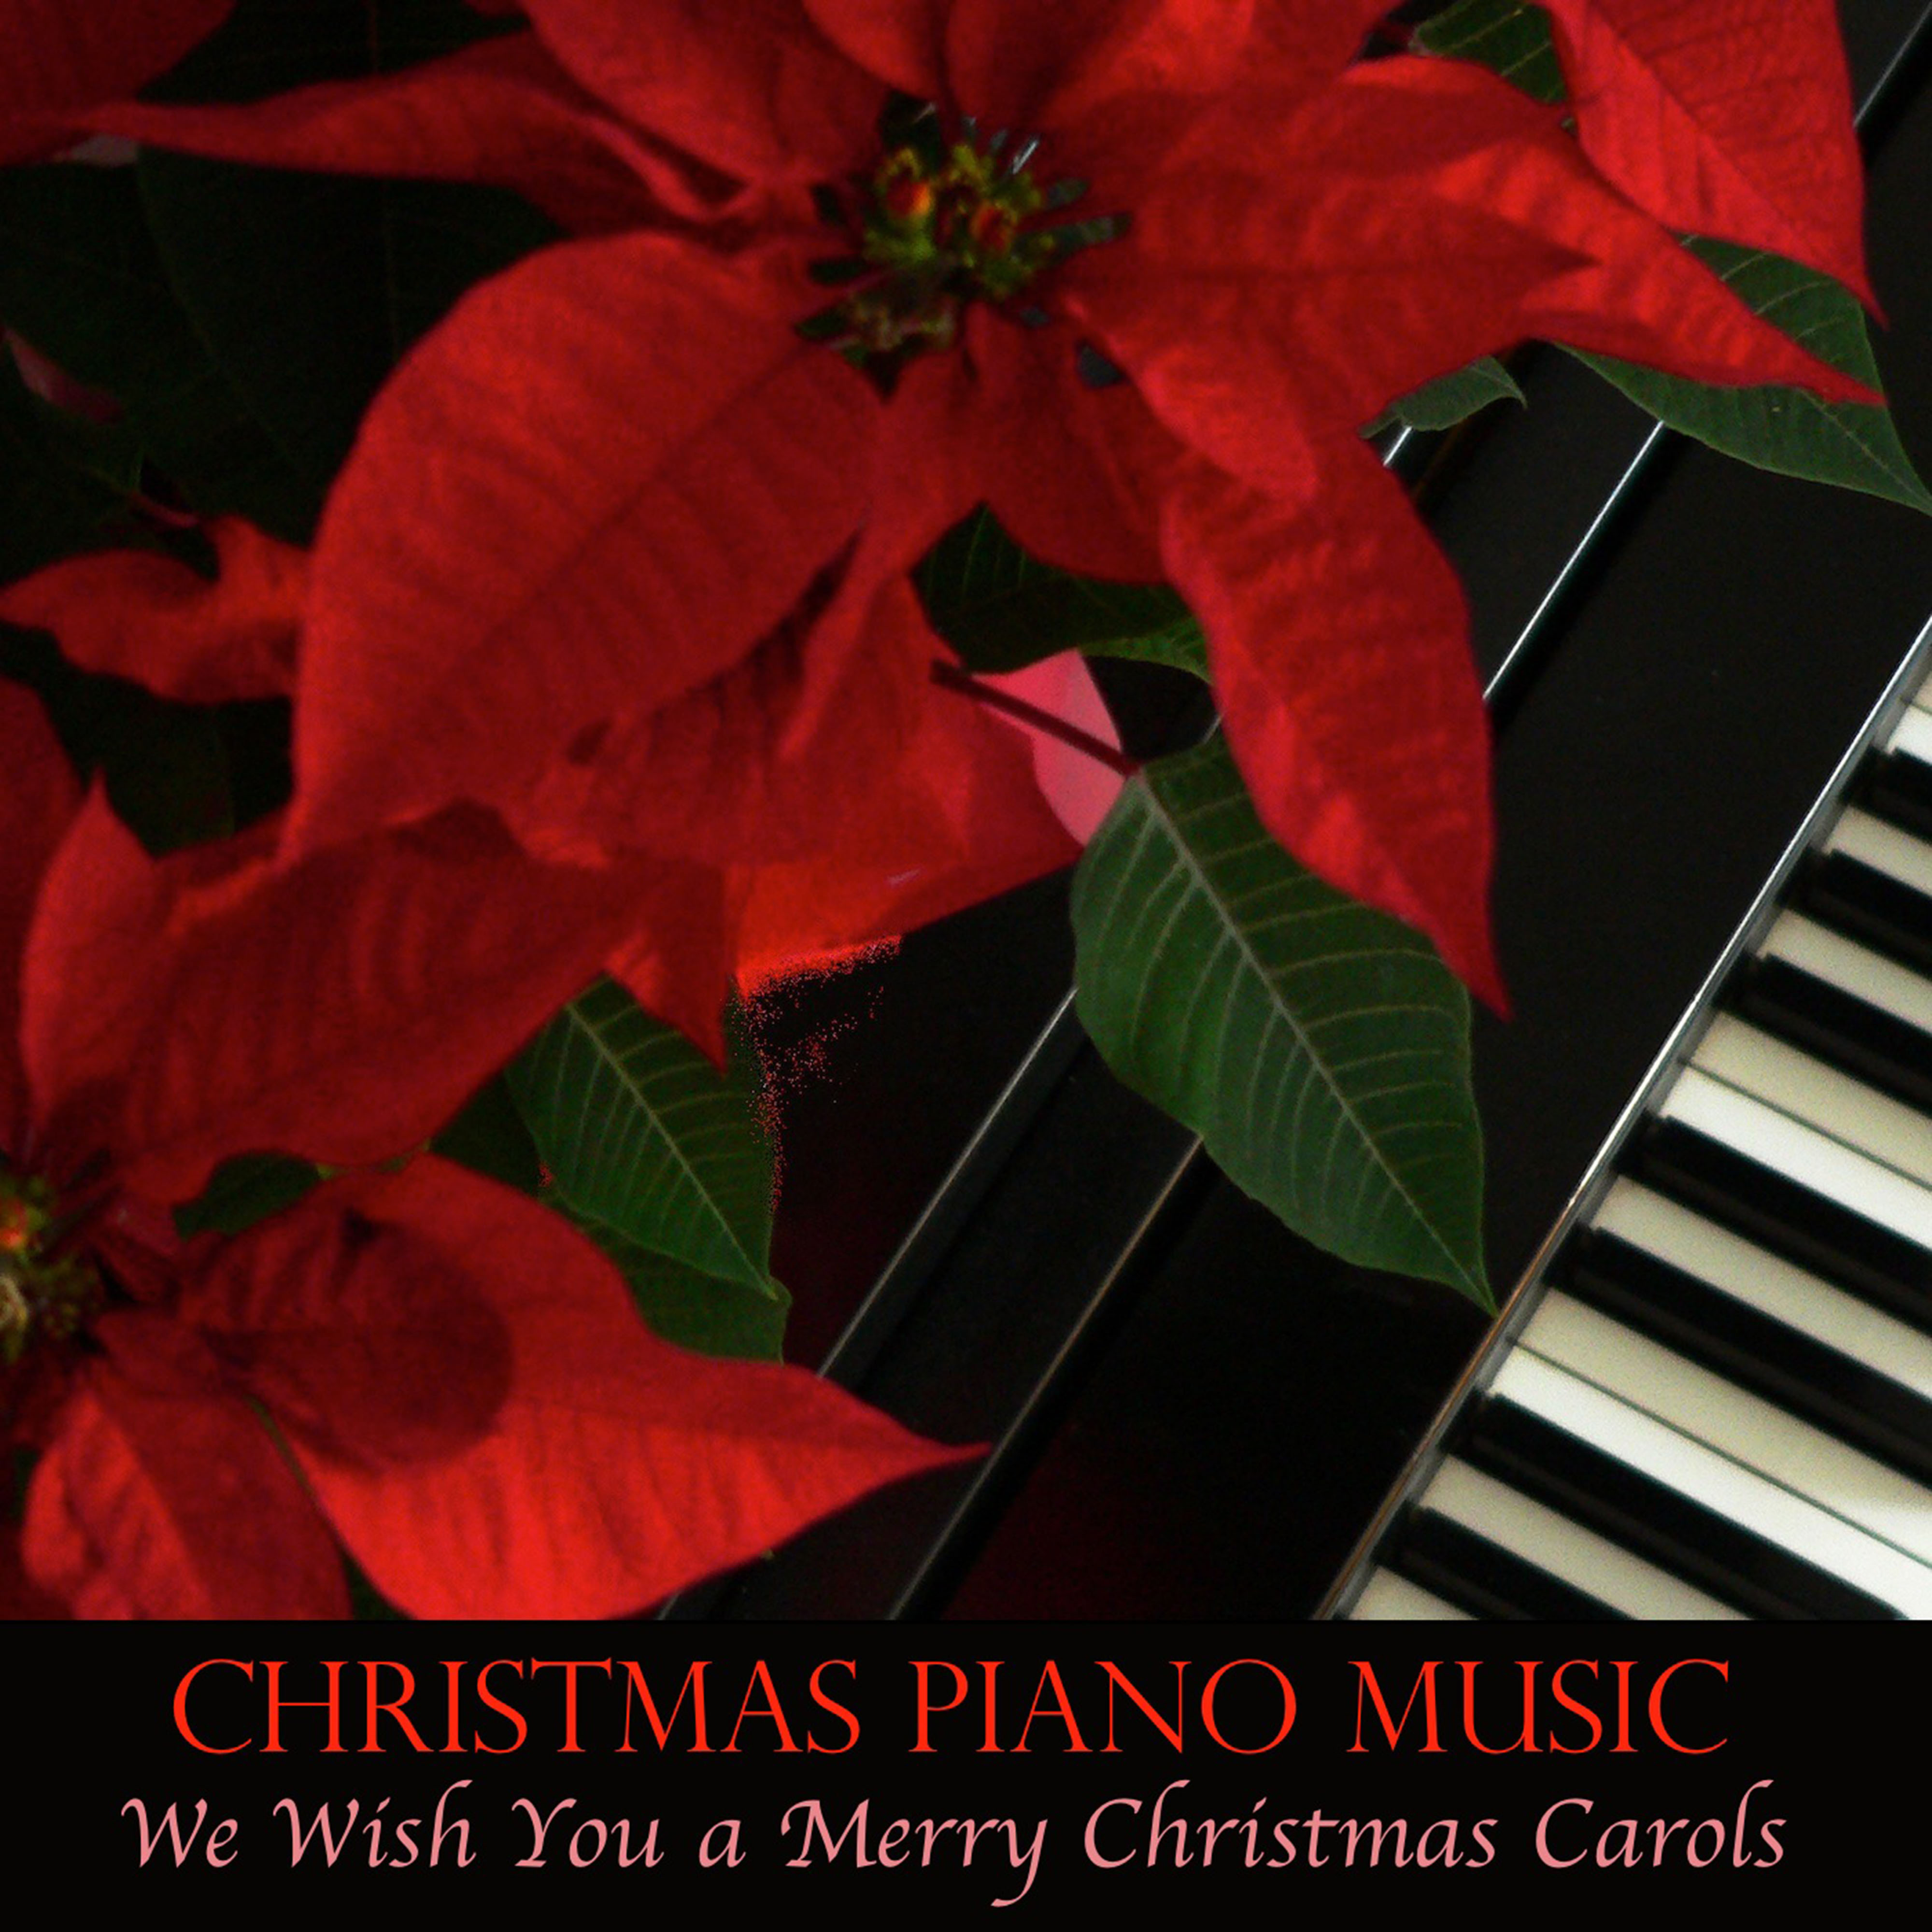 Christmas Piano Music - We Wish You a Merry Christmas Carols